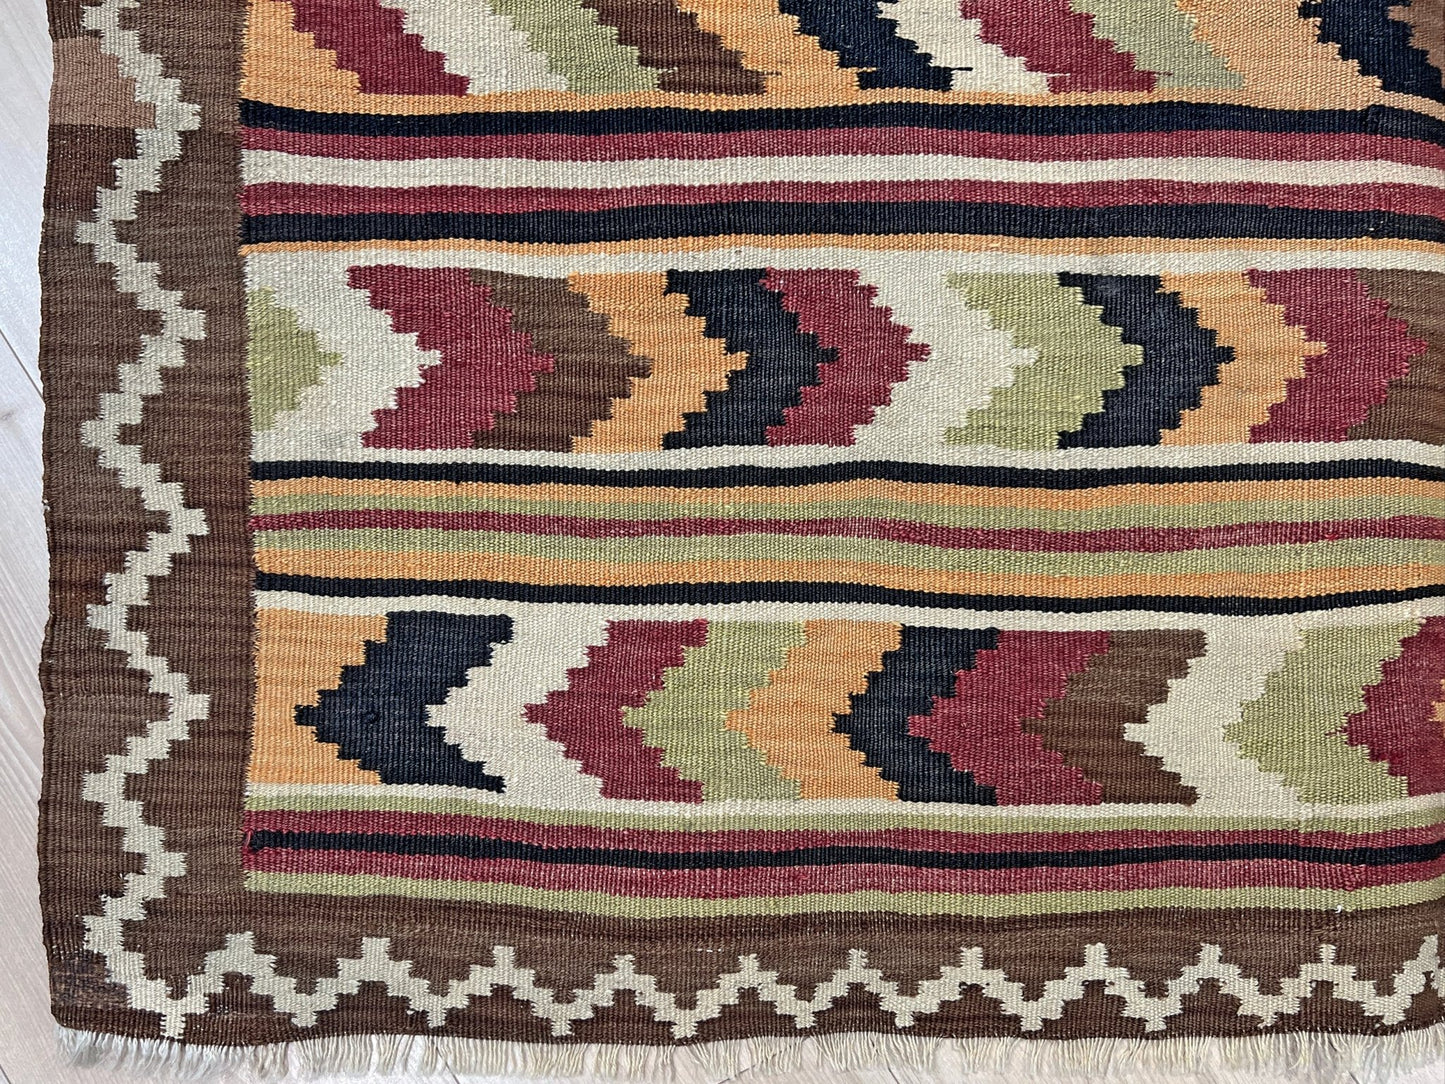 Navajo style handmade vintage rug shop. Persian wool kilim rug. Buy carpet online San francisco bay area.